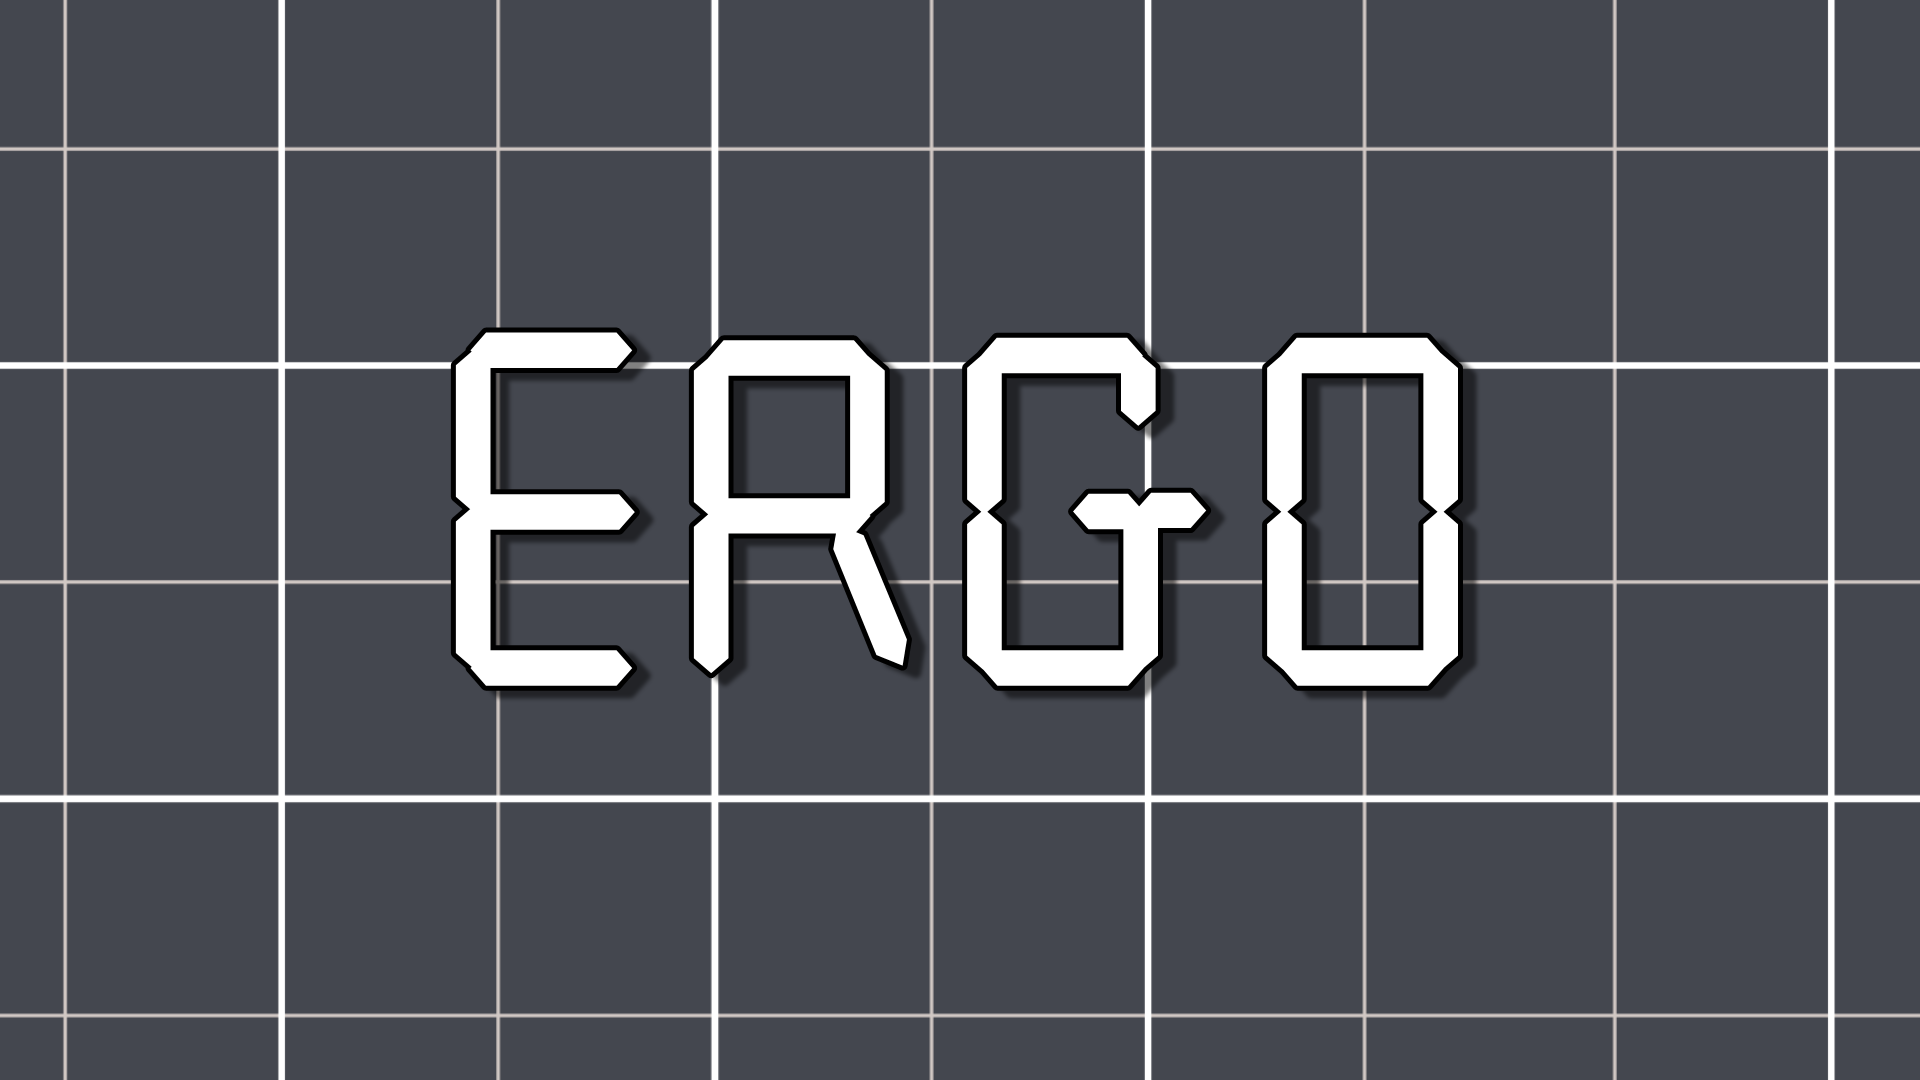 Ergo Game Banner Image